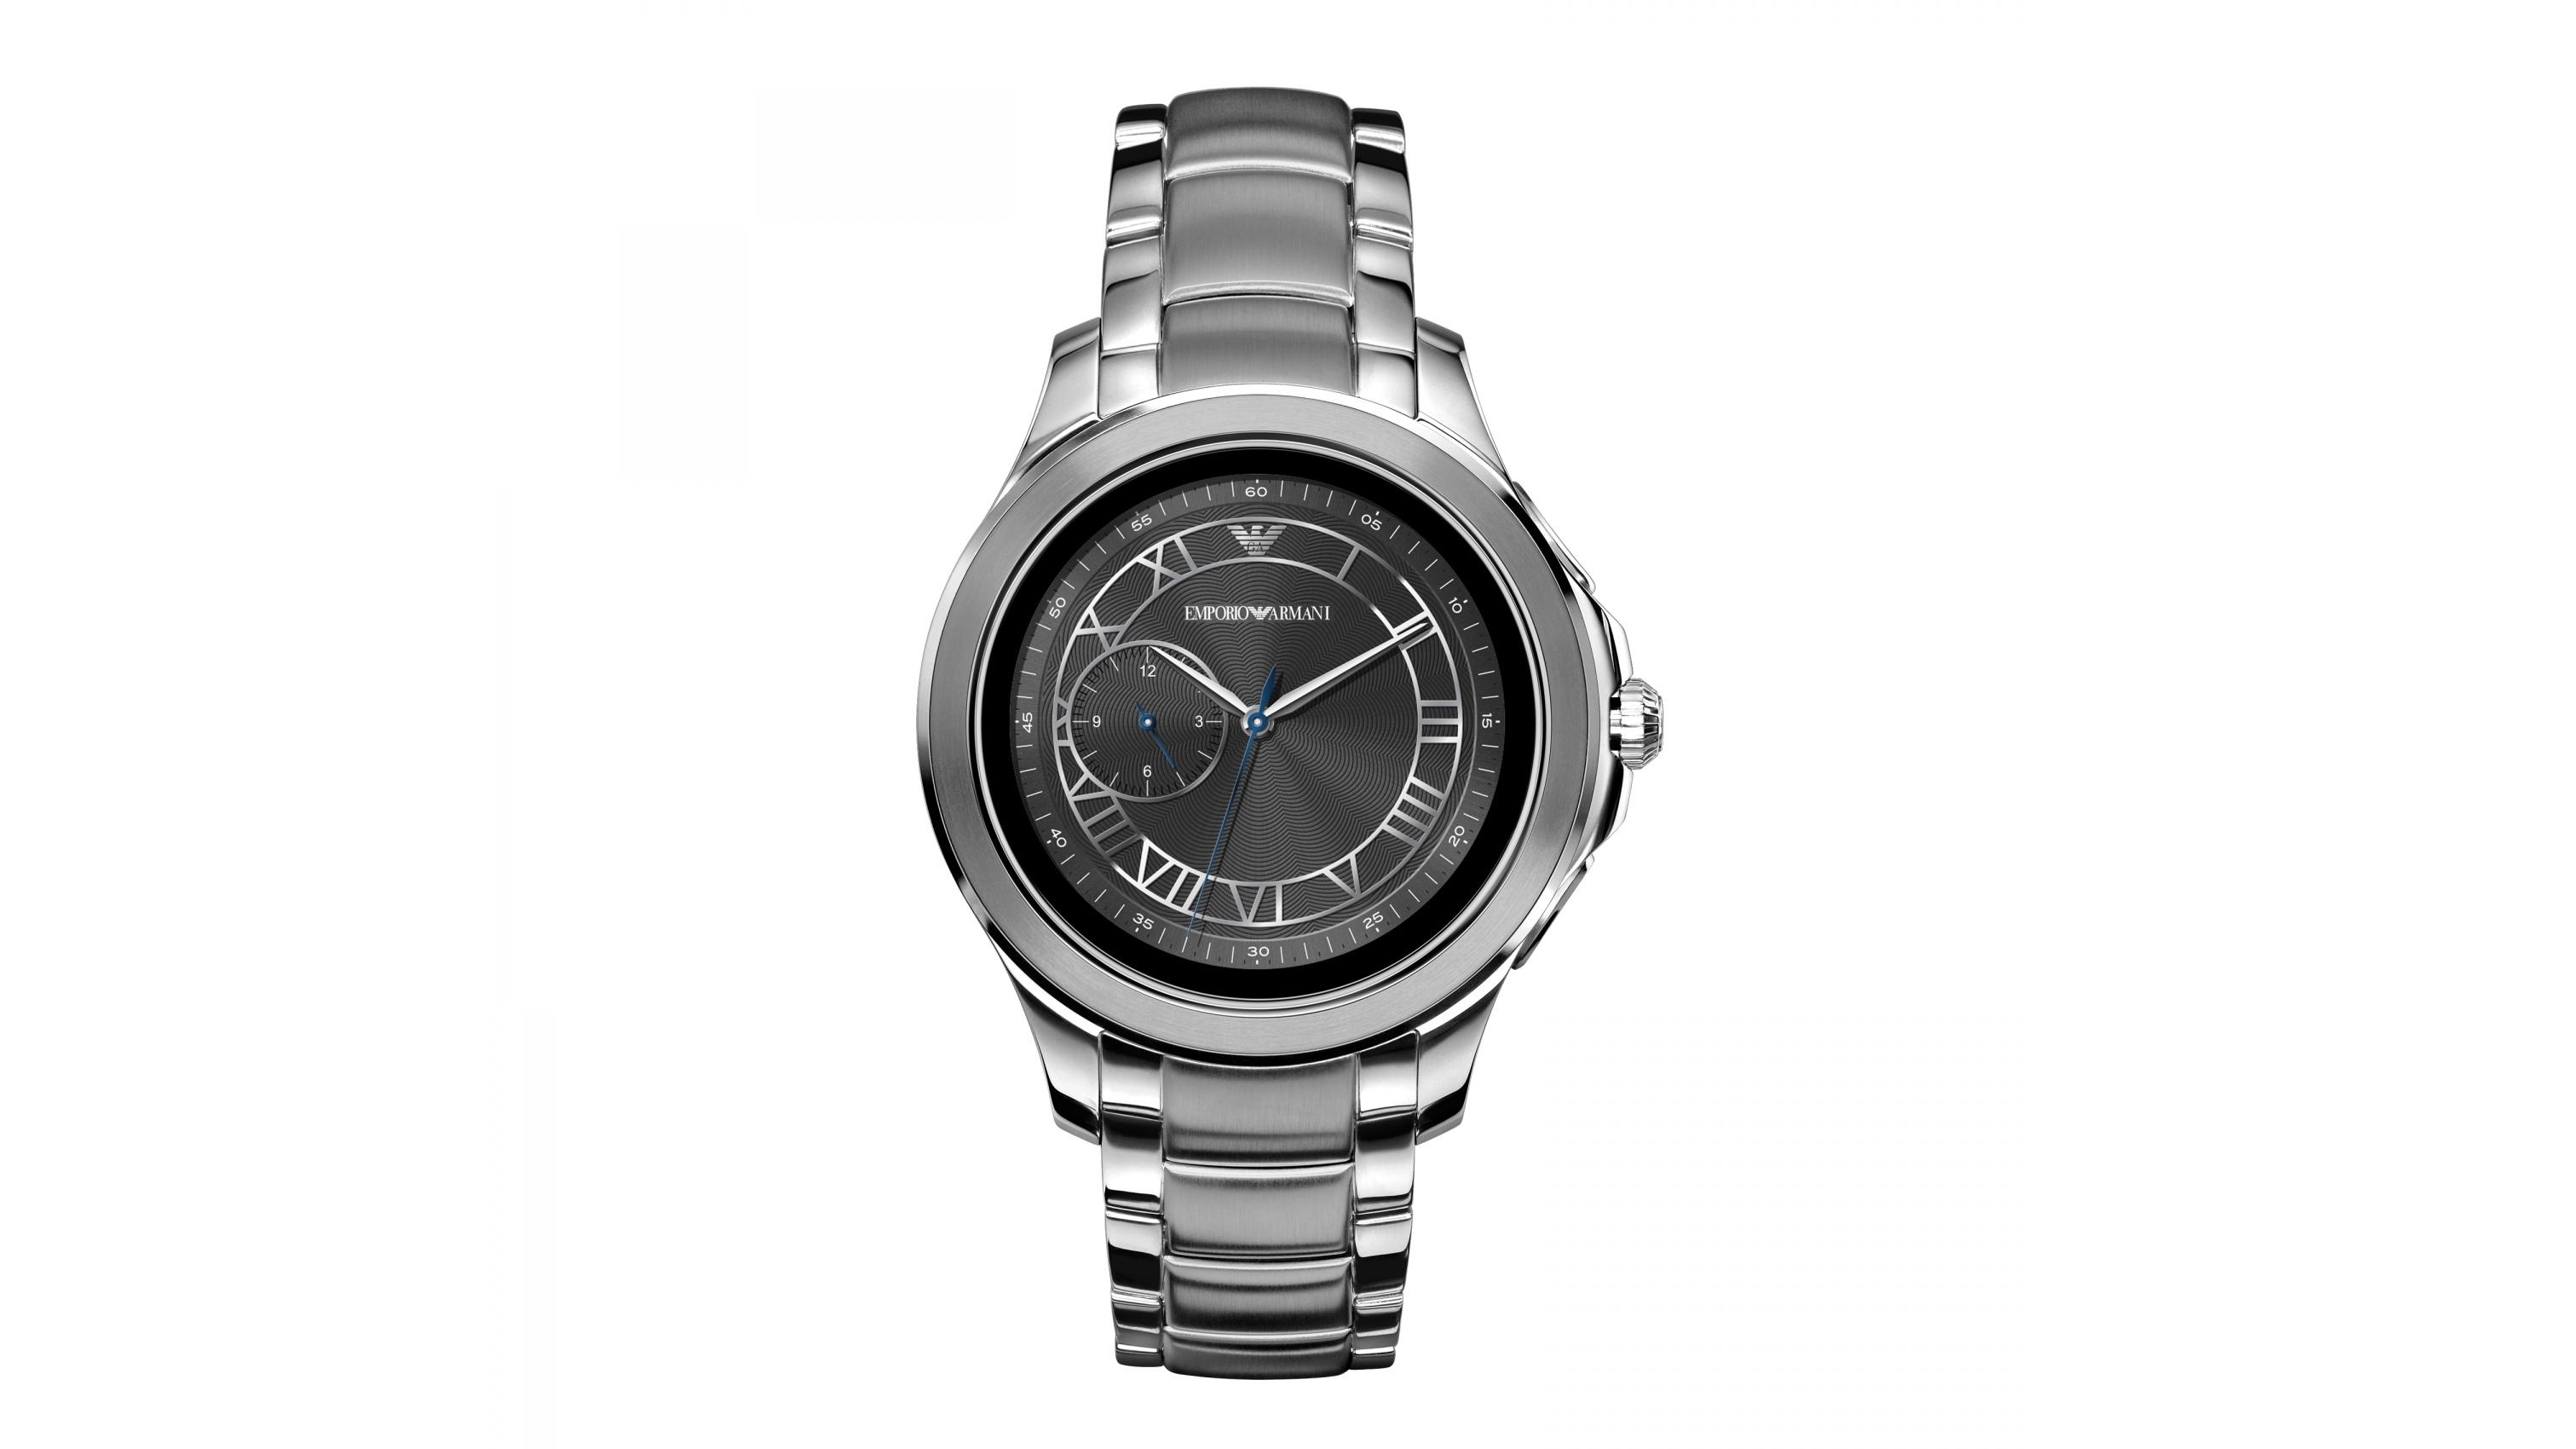 armani smartwatch 5010